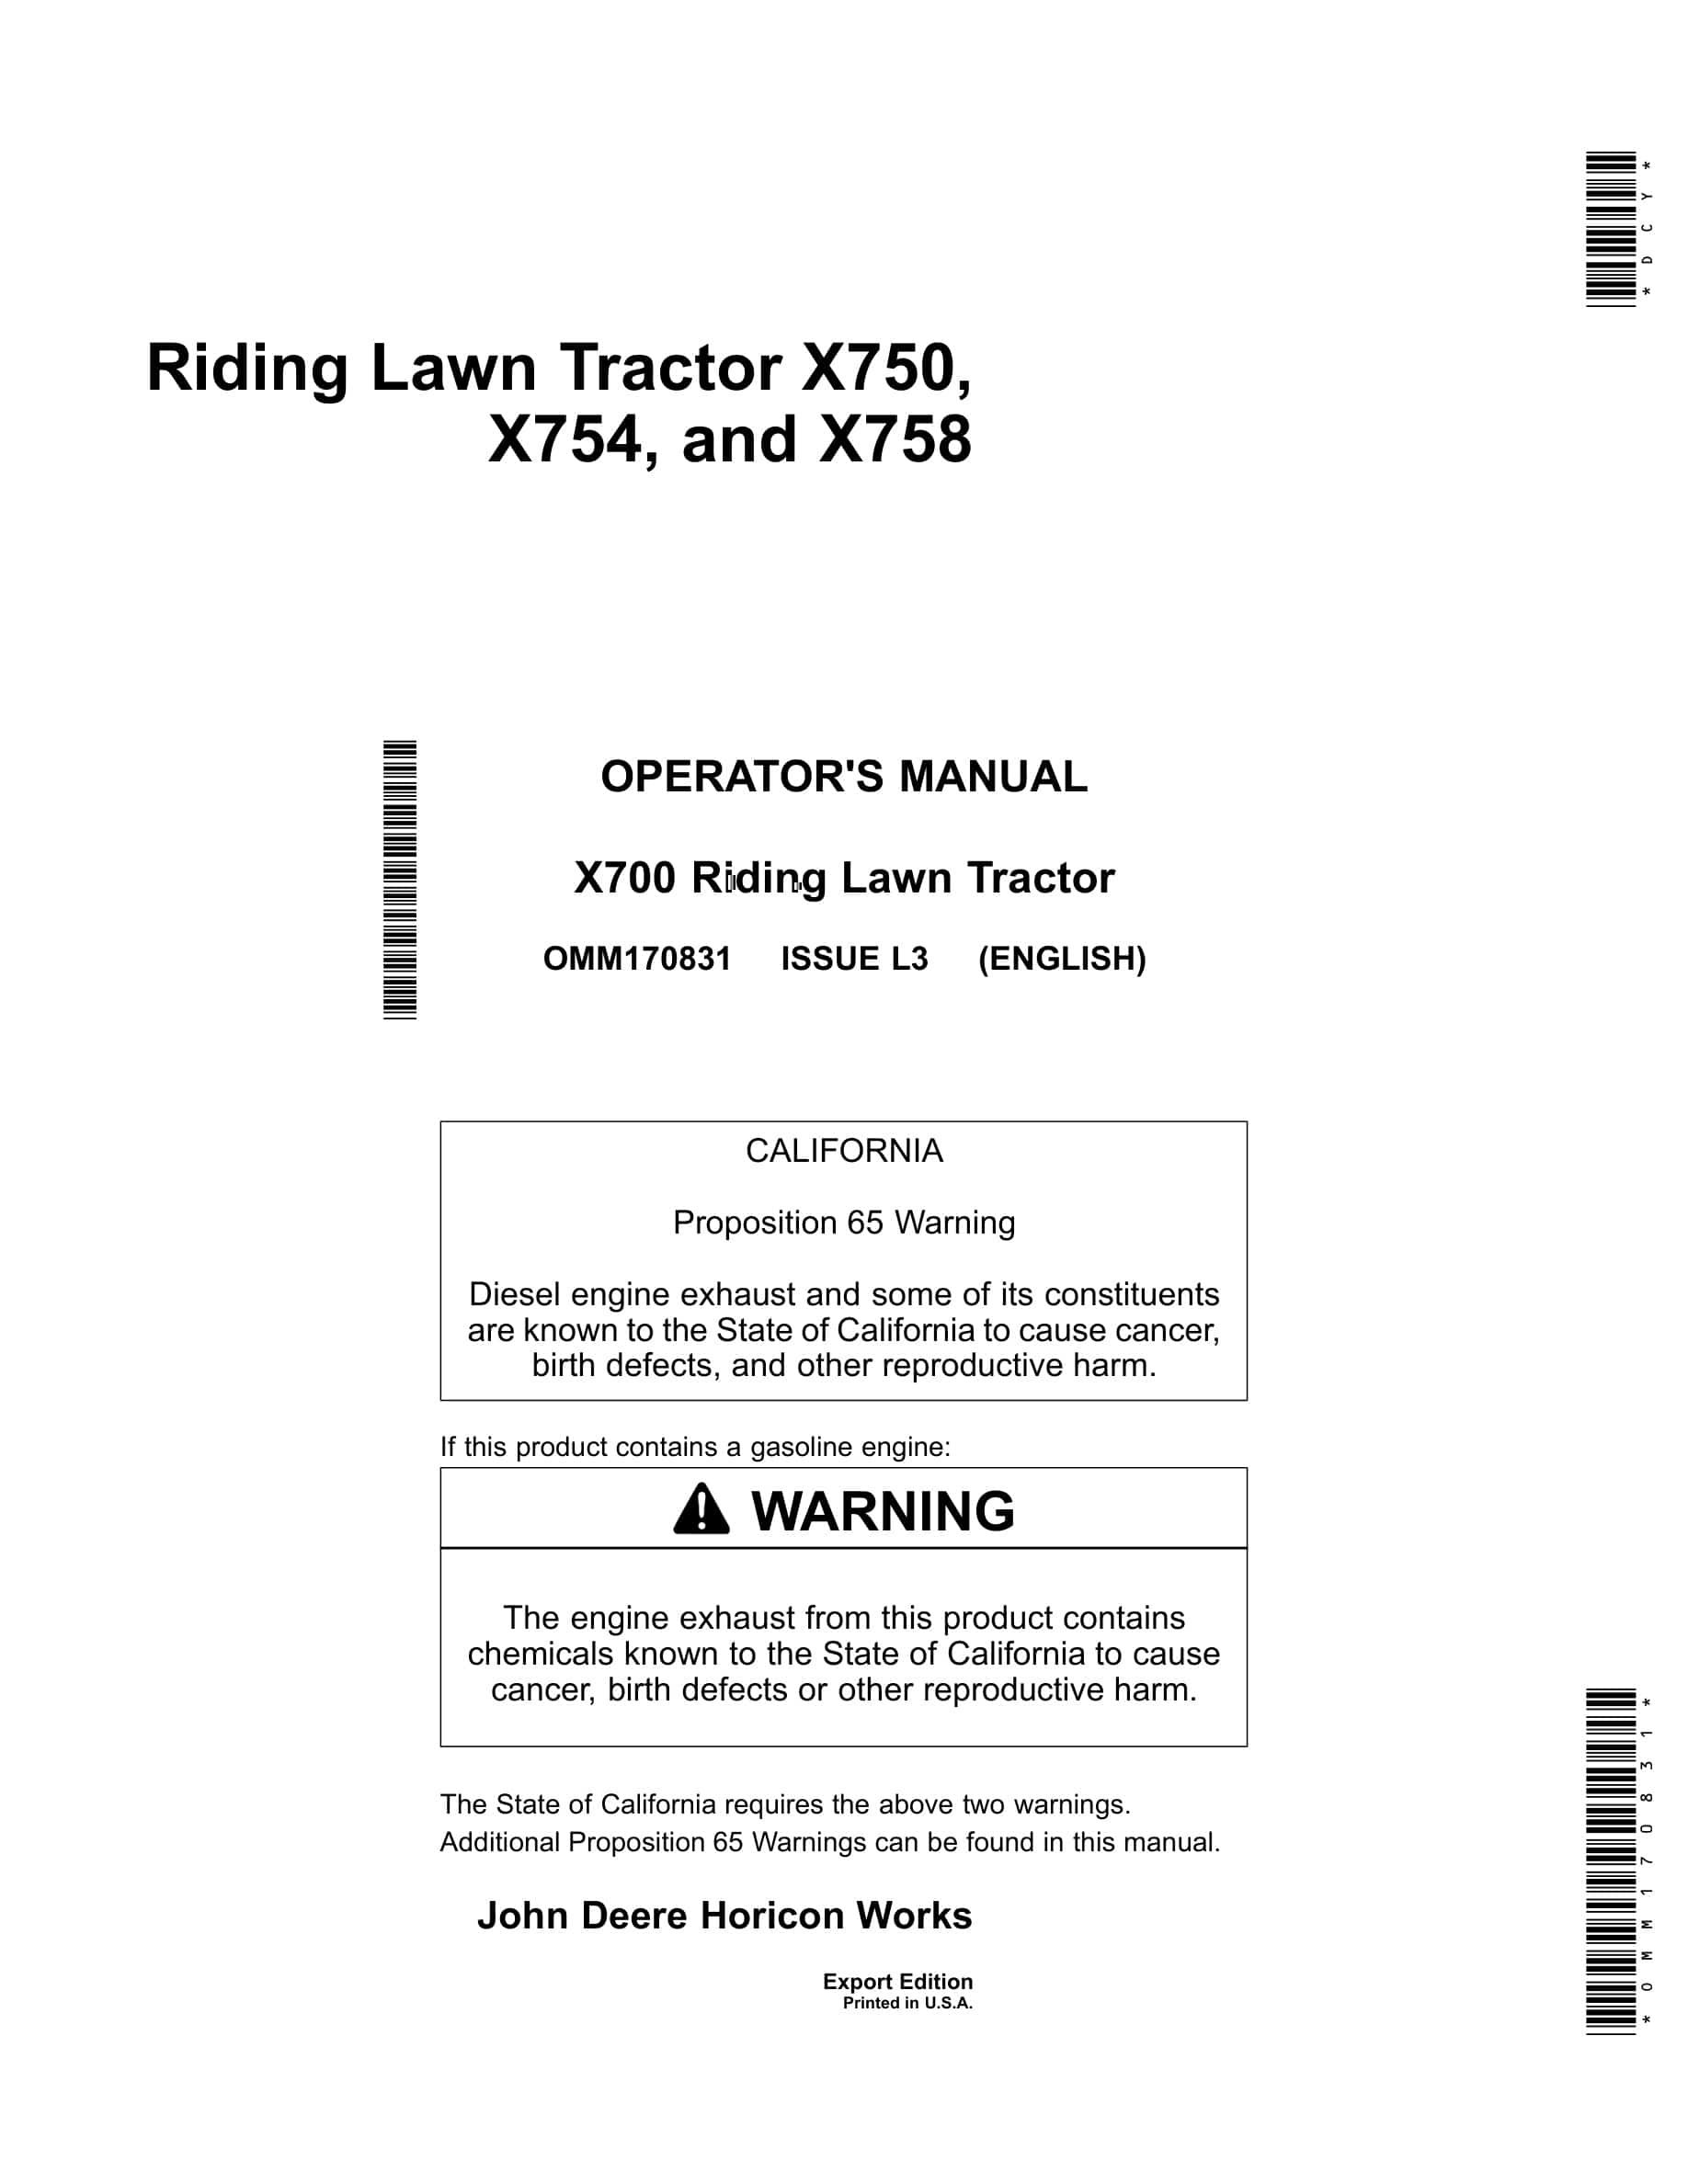 John Deere X700 Riding Lawn Tractors Operator Manual OMM170831-1